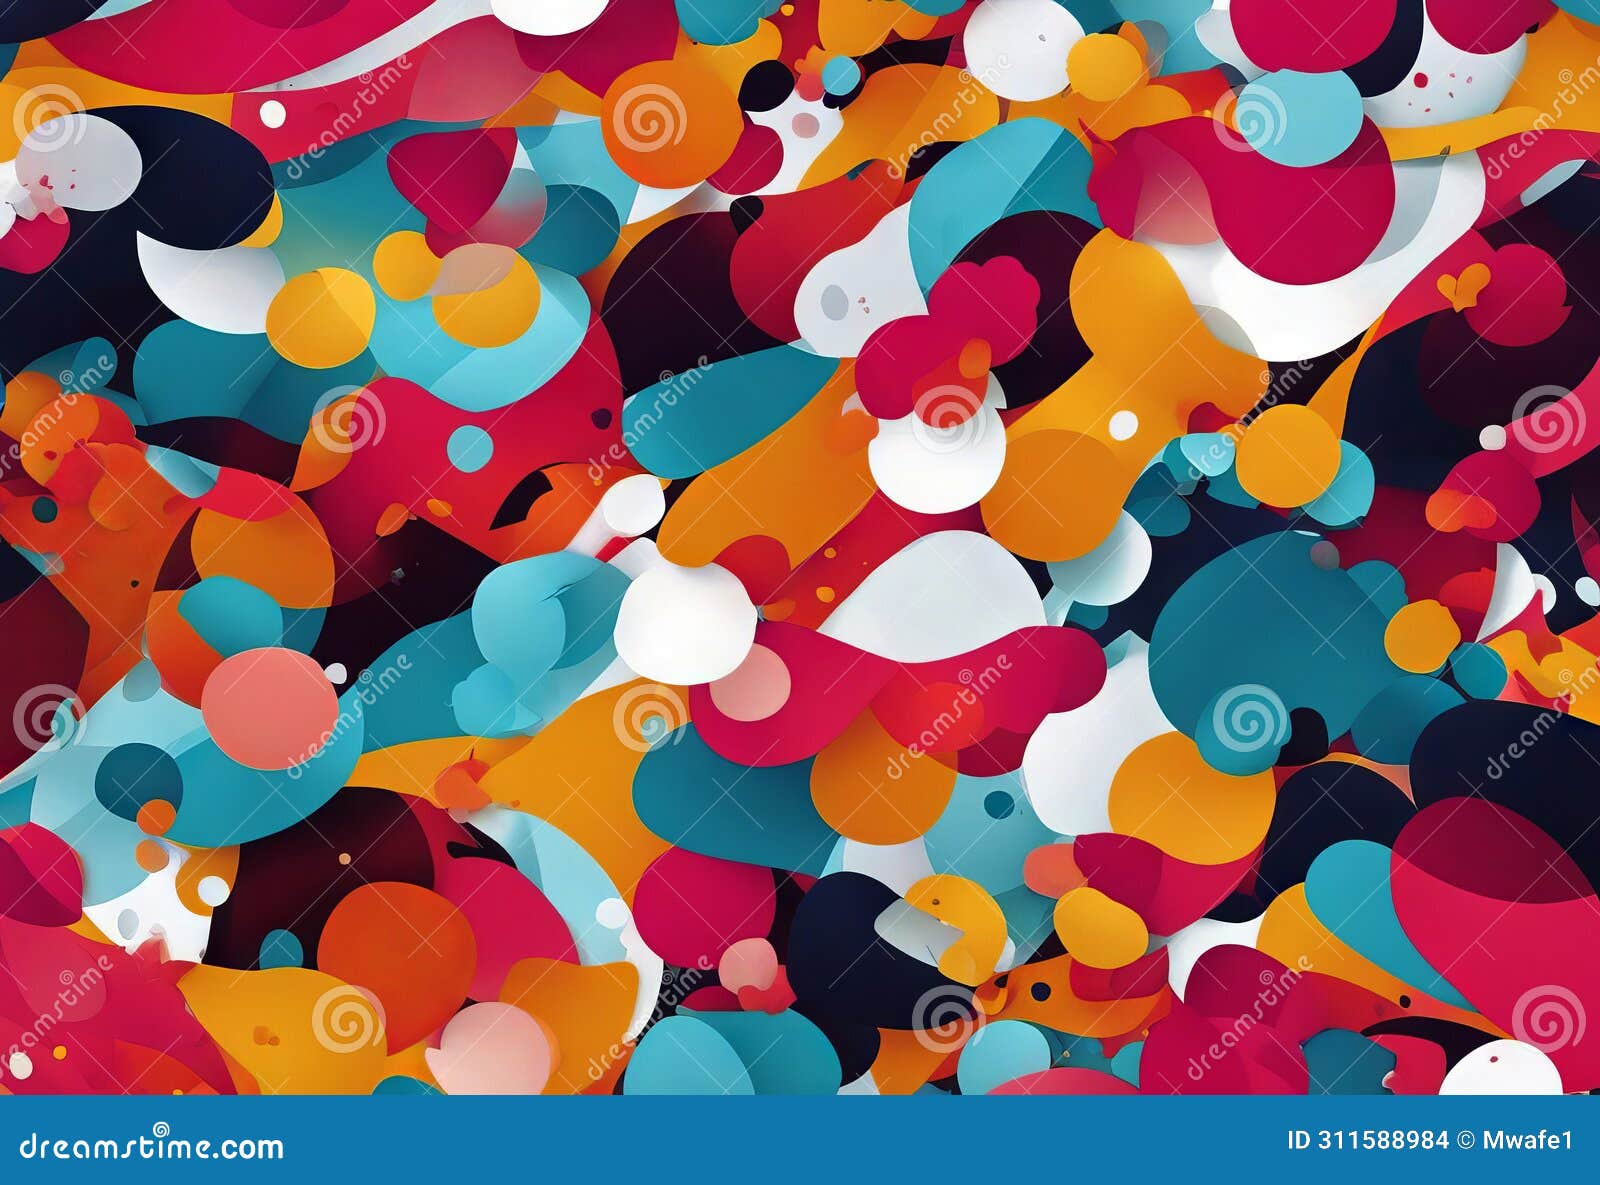 abstract background trendy colorful splash cartoon overlay spot pattern stock 